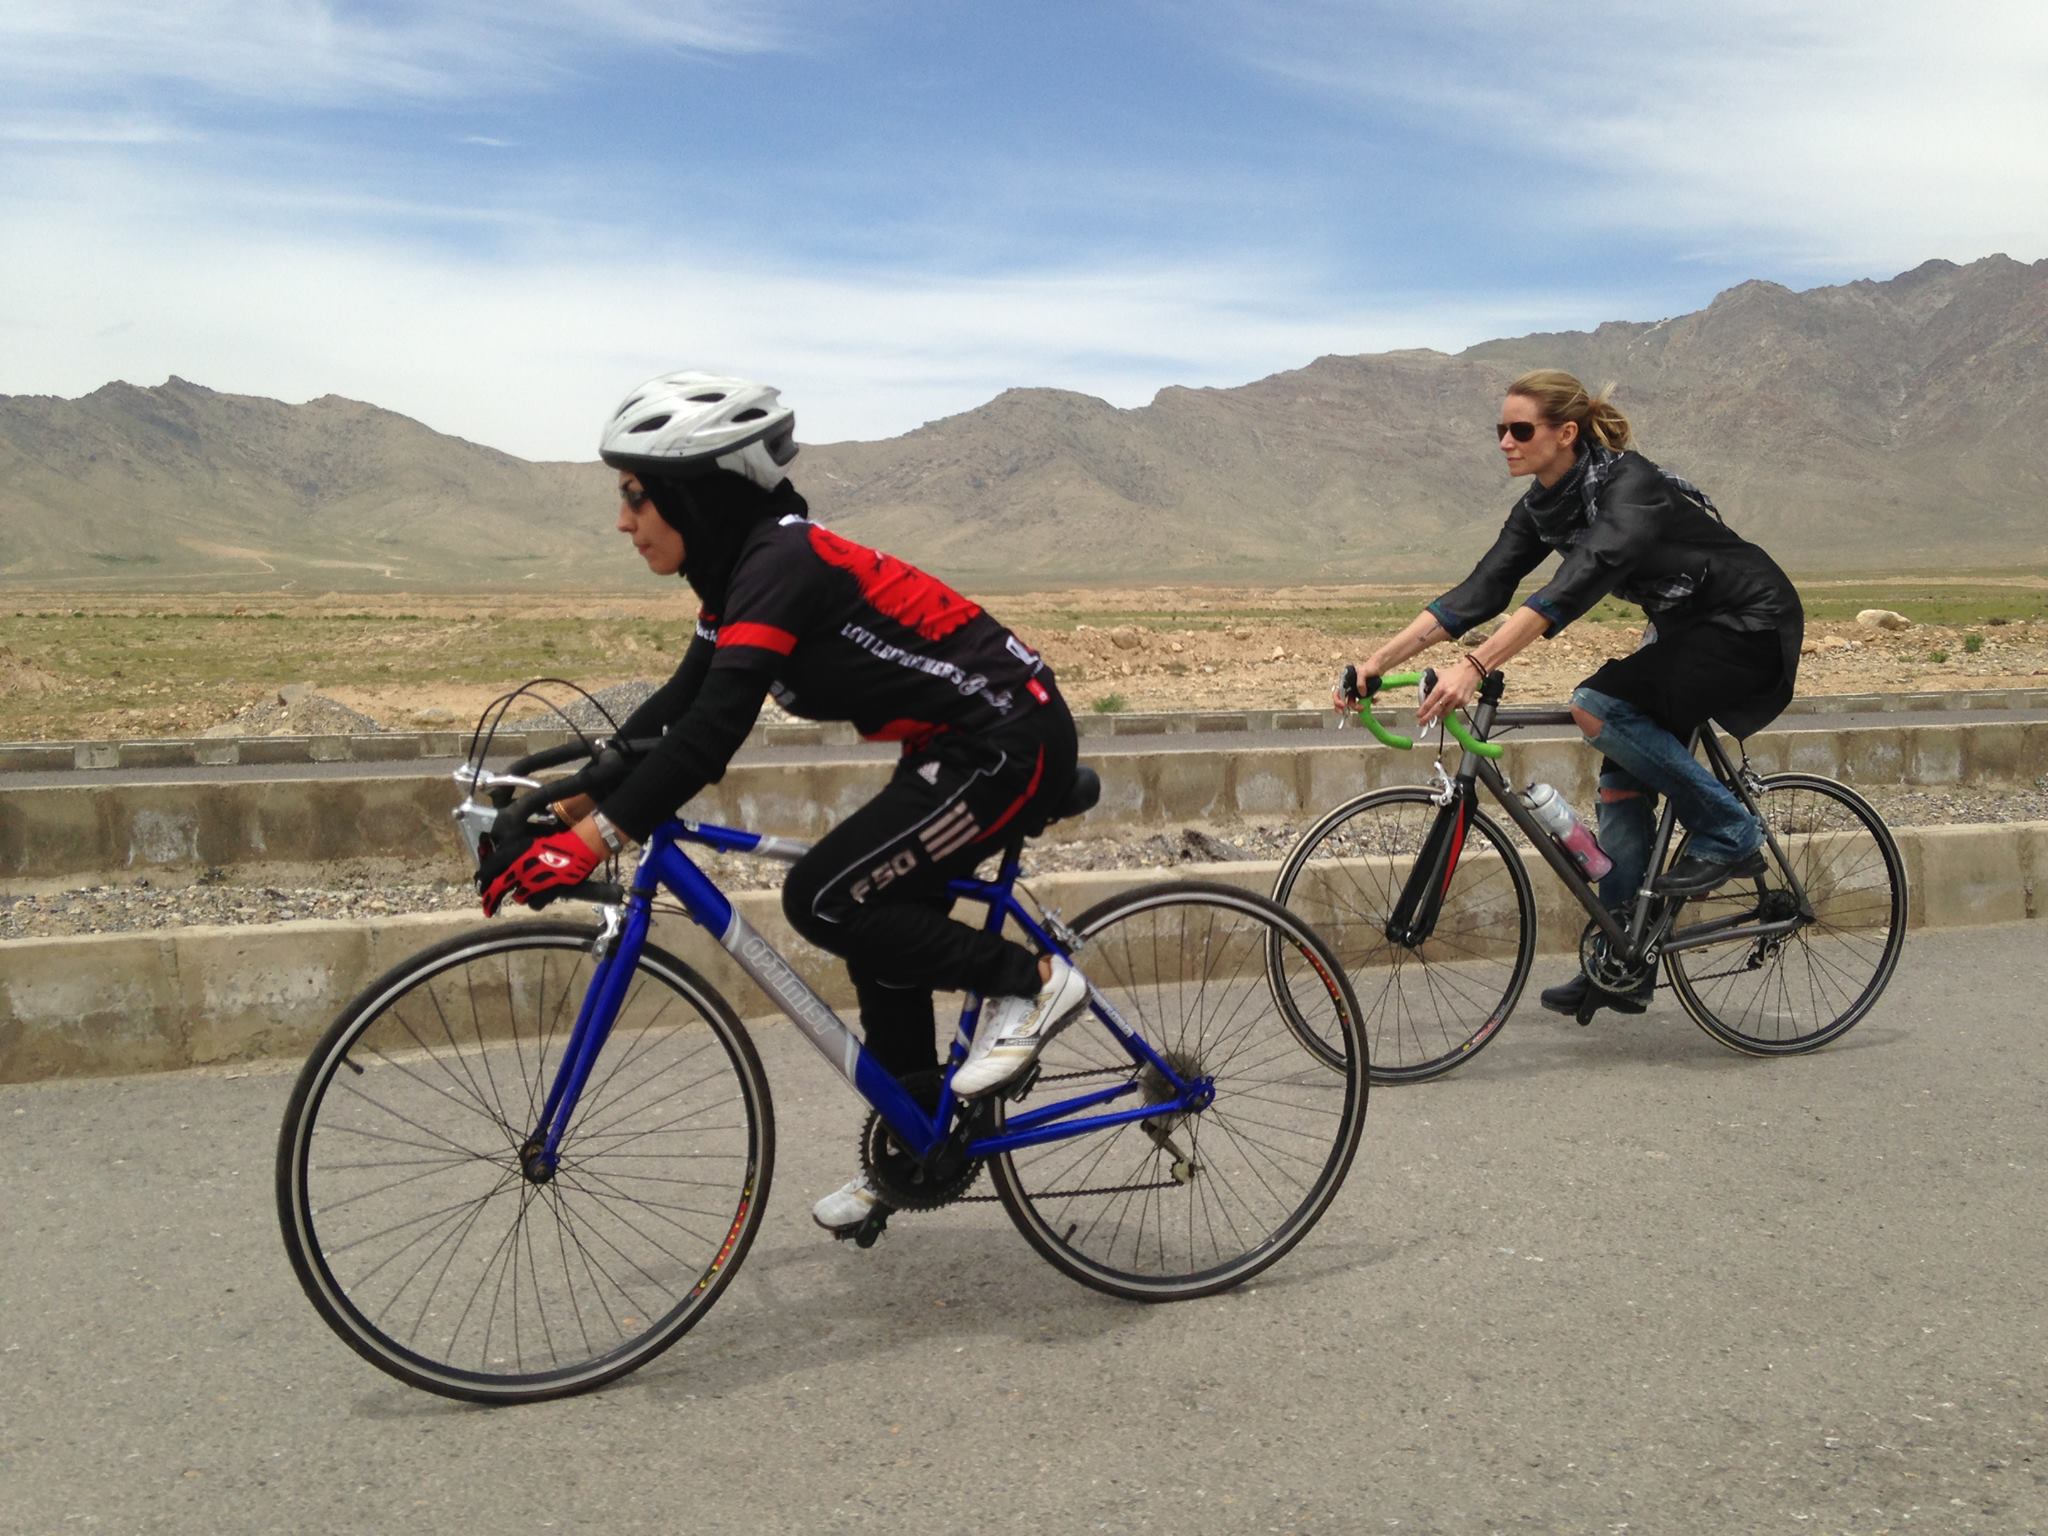 Afgan Womens Cycling Team